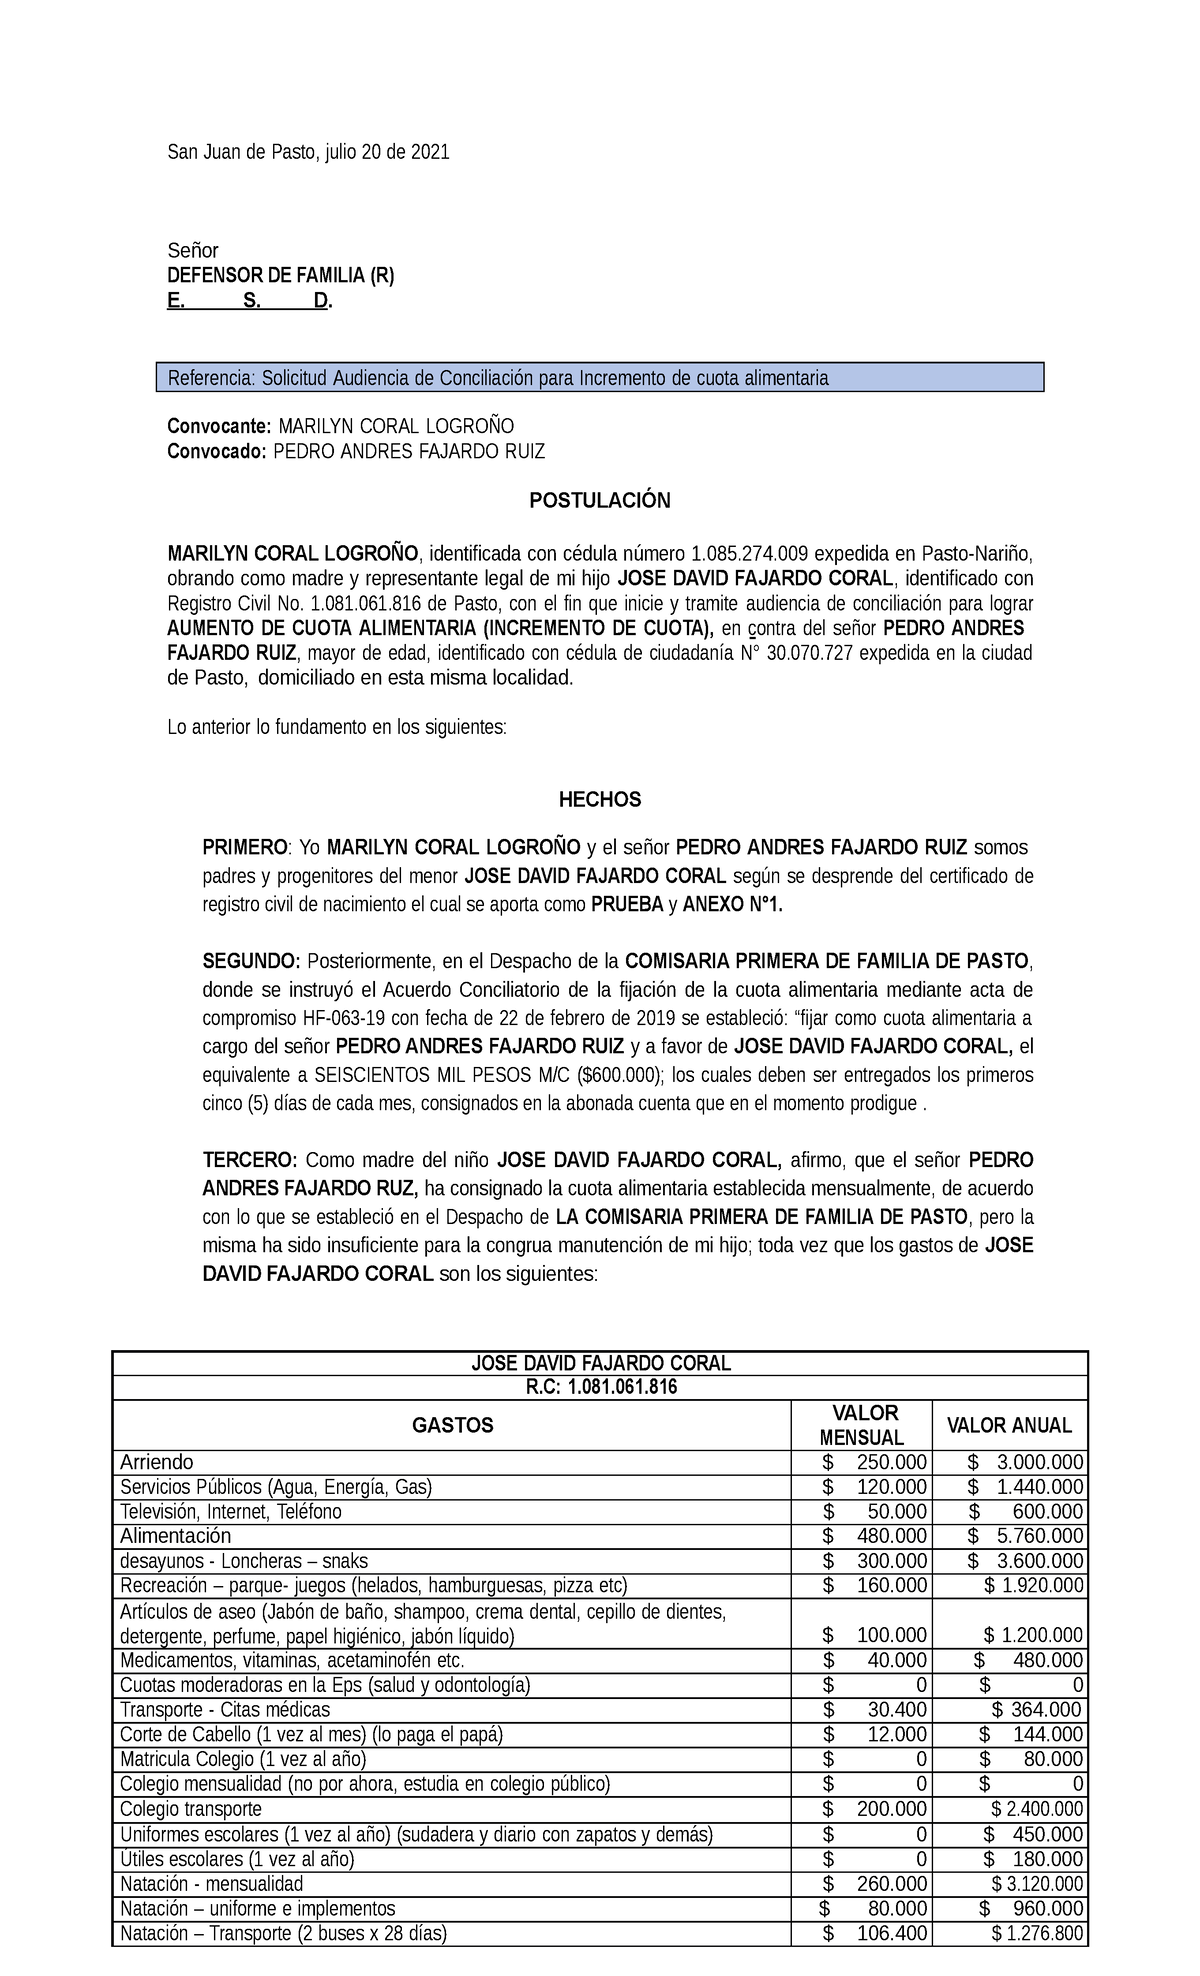 Solicitud Audiencia DE Conciliacion Aumento DE Cuota Alimentaria - San Juan  de Pasto, julio 20 de - Studocu